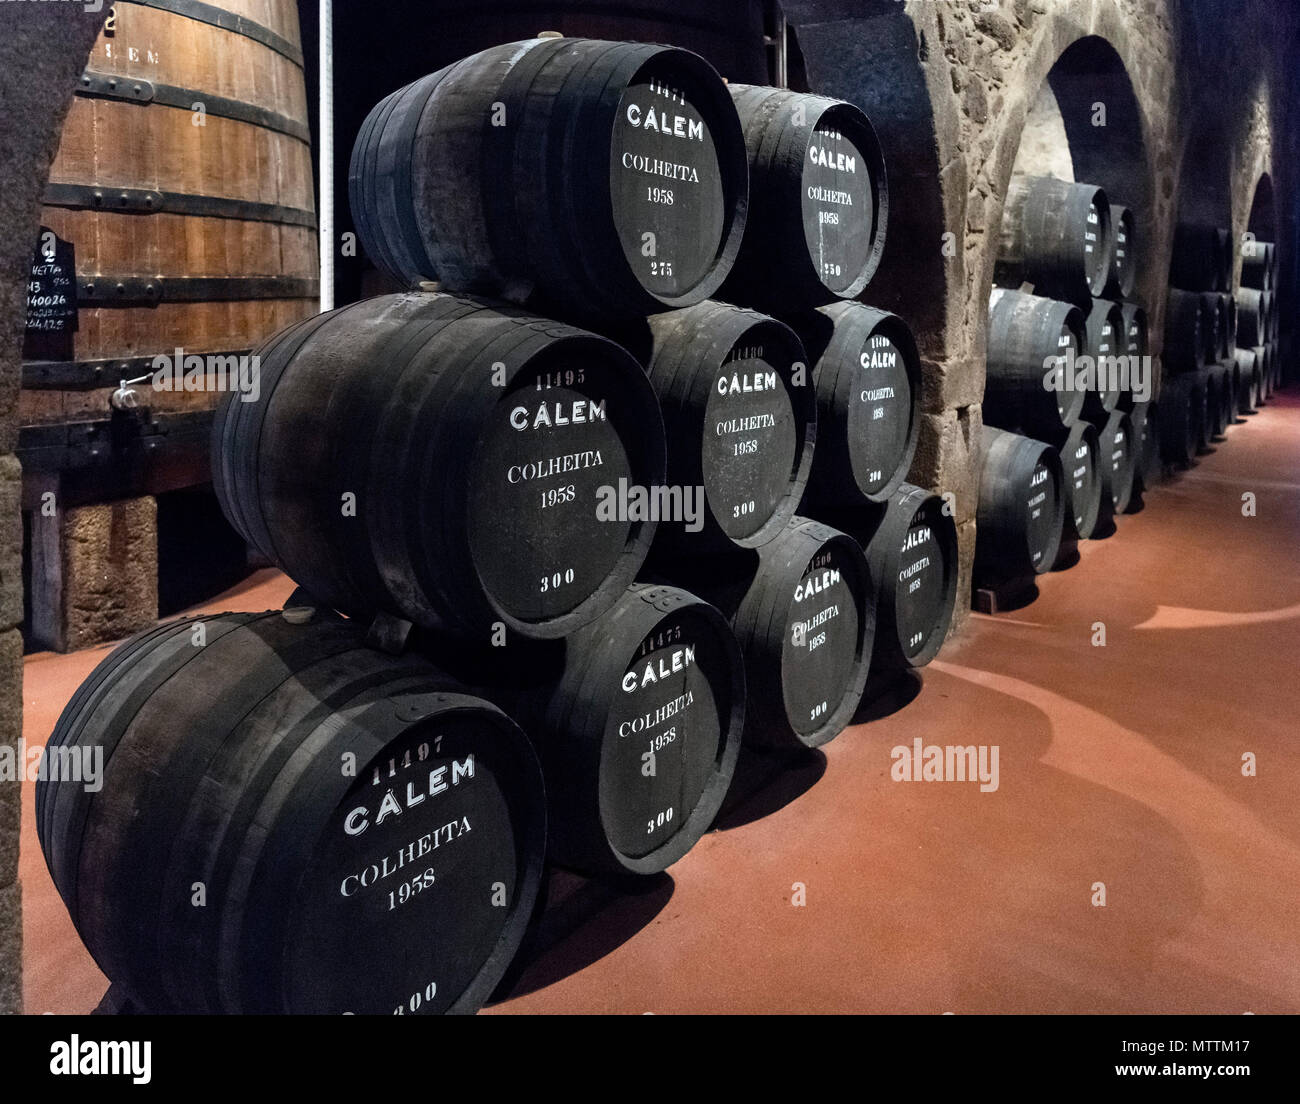 Port wine barrels at the Calem Wine Lodge, Wine Tasting Tour, Vila Nova de Gaia, Porto, Portugal Stock Photo